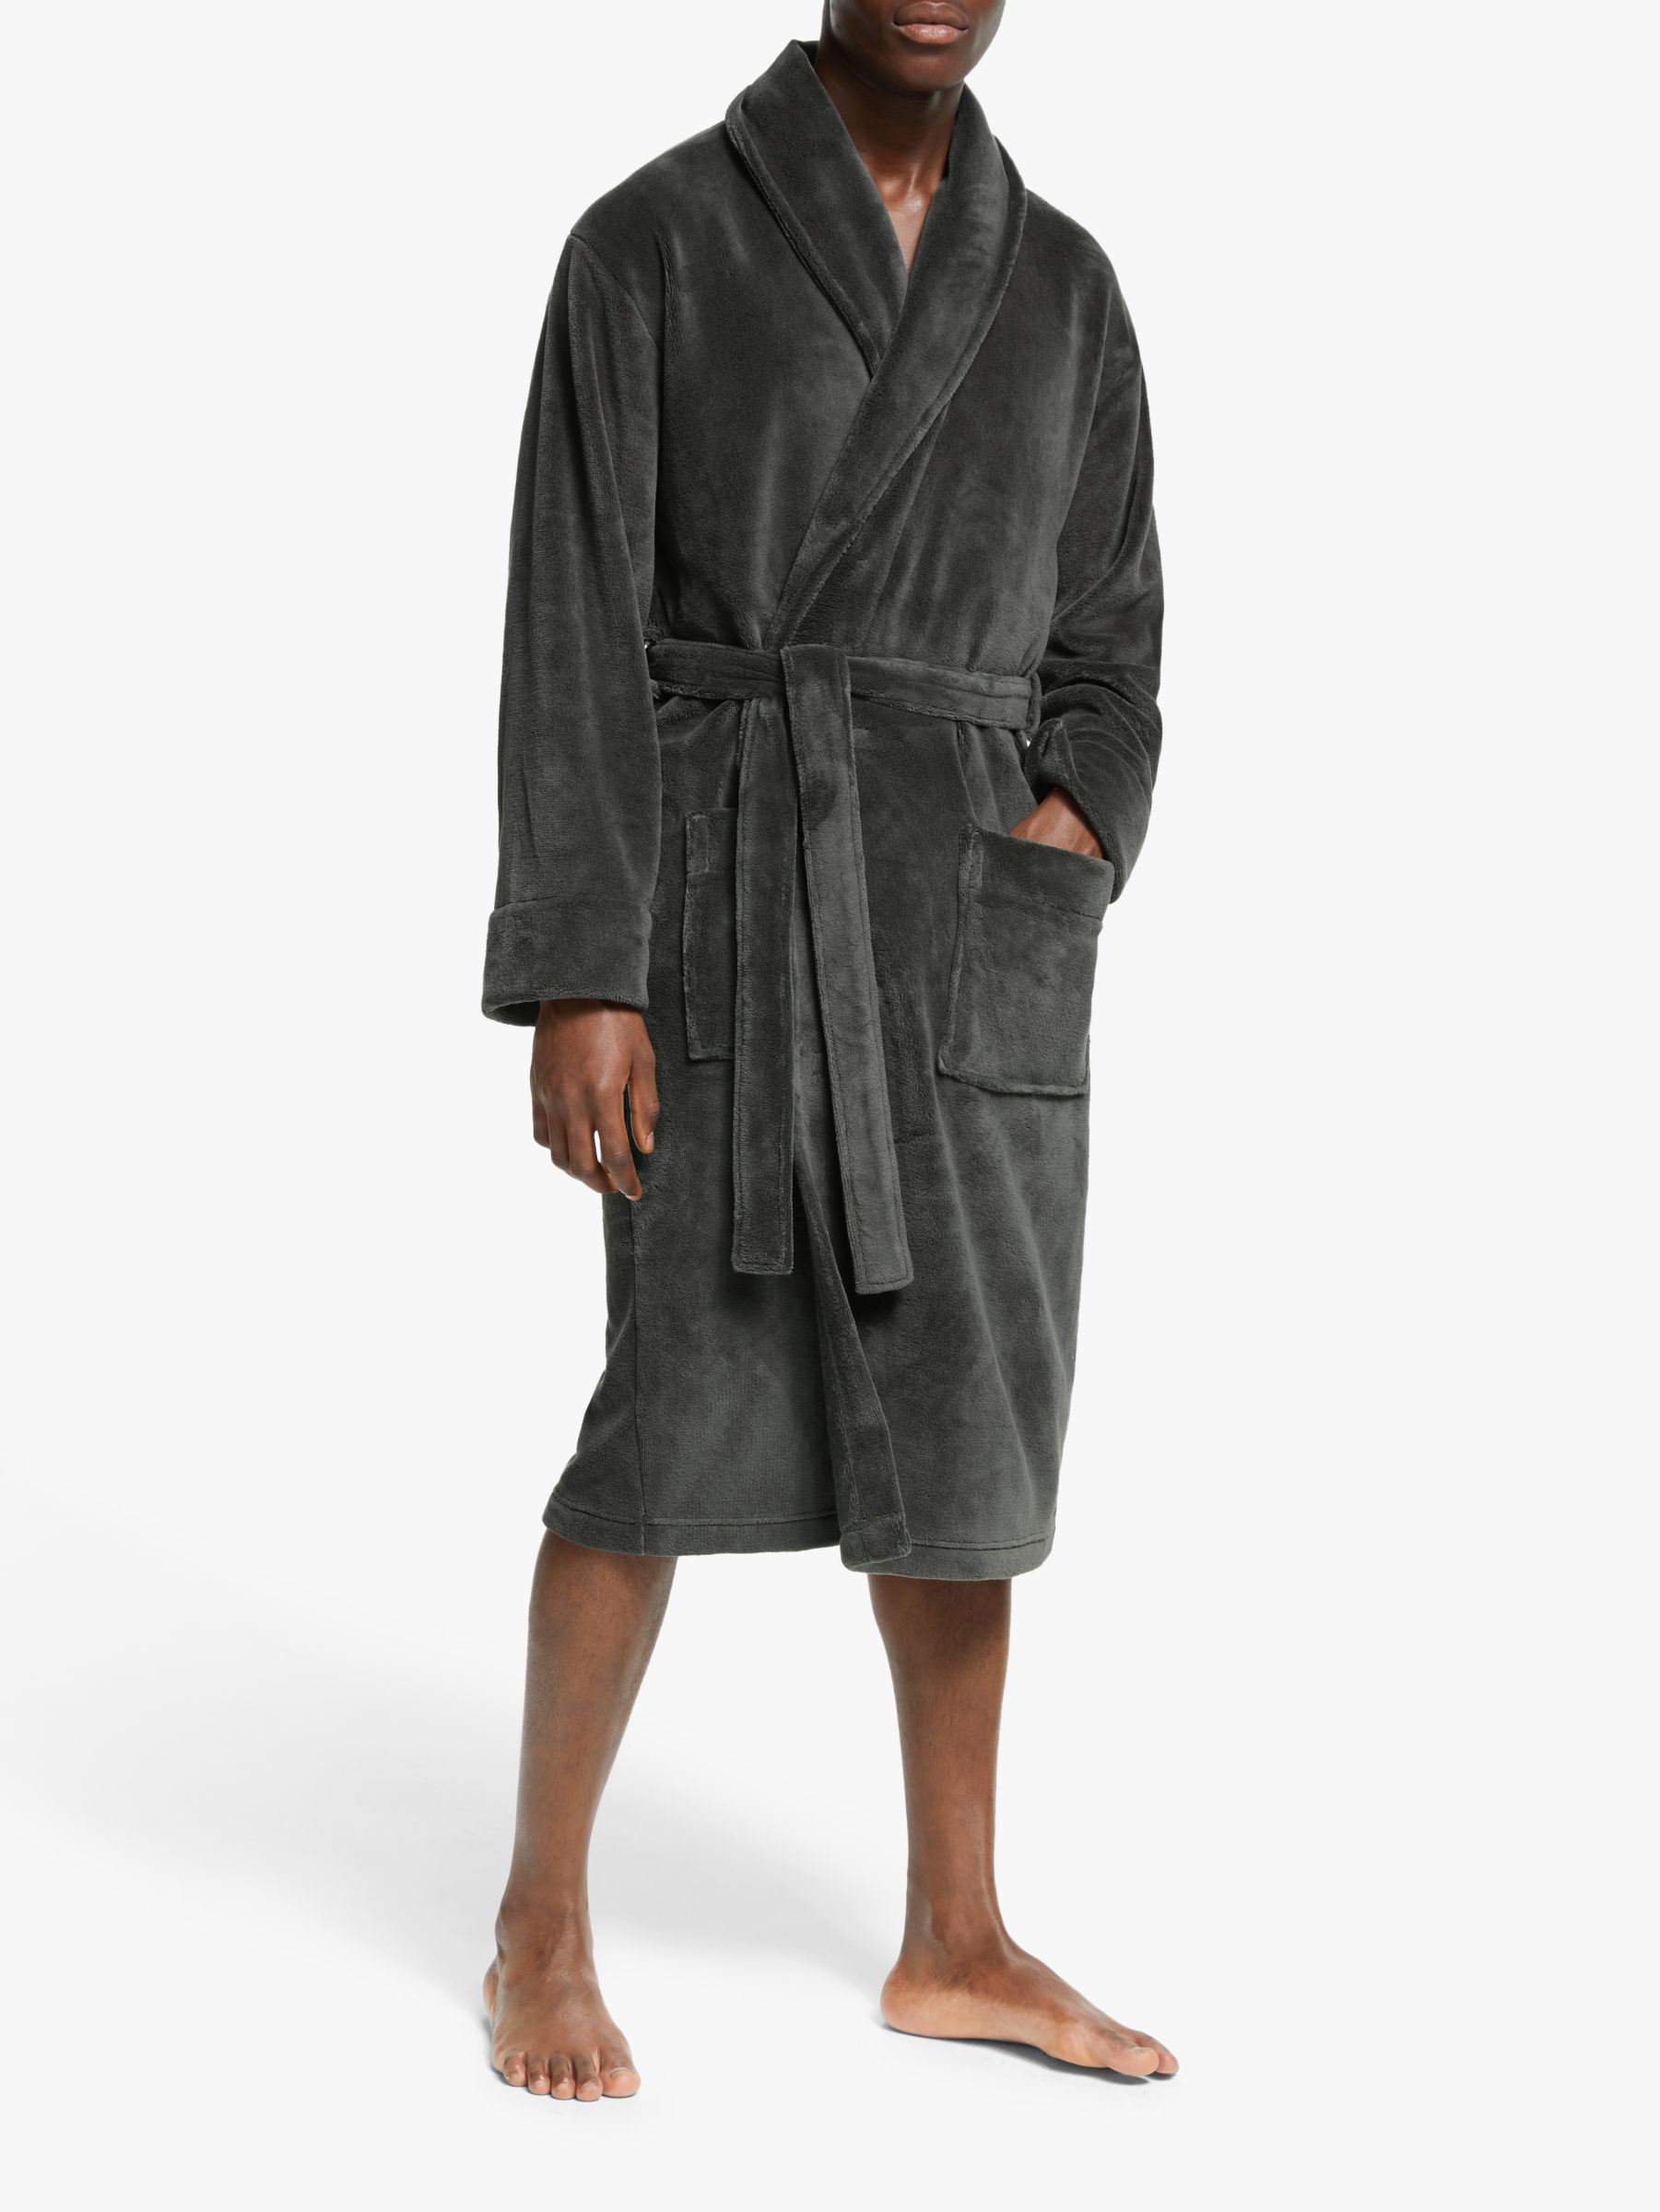 John Lewis & Partners Sheared Fleece Robe, Grey, XL